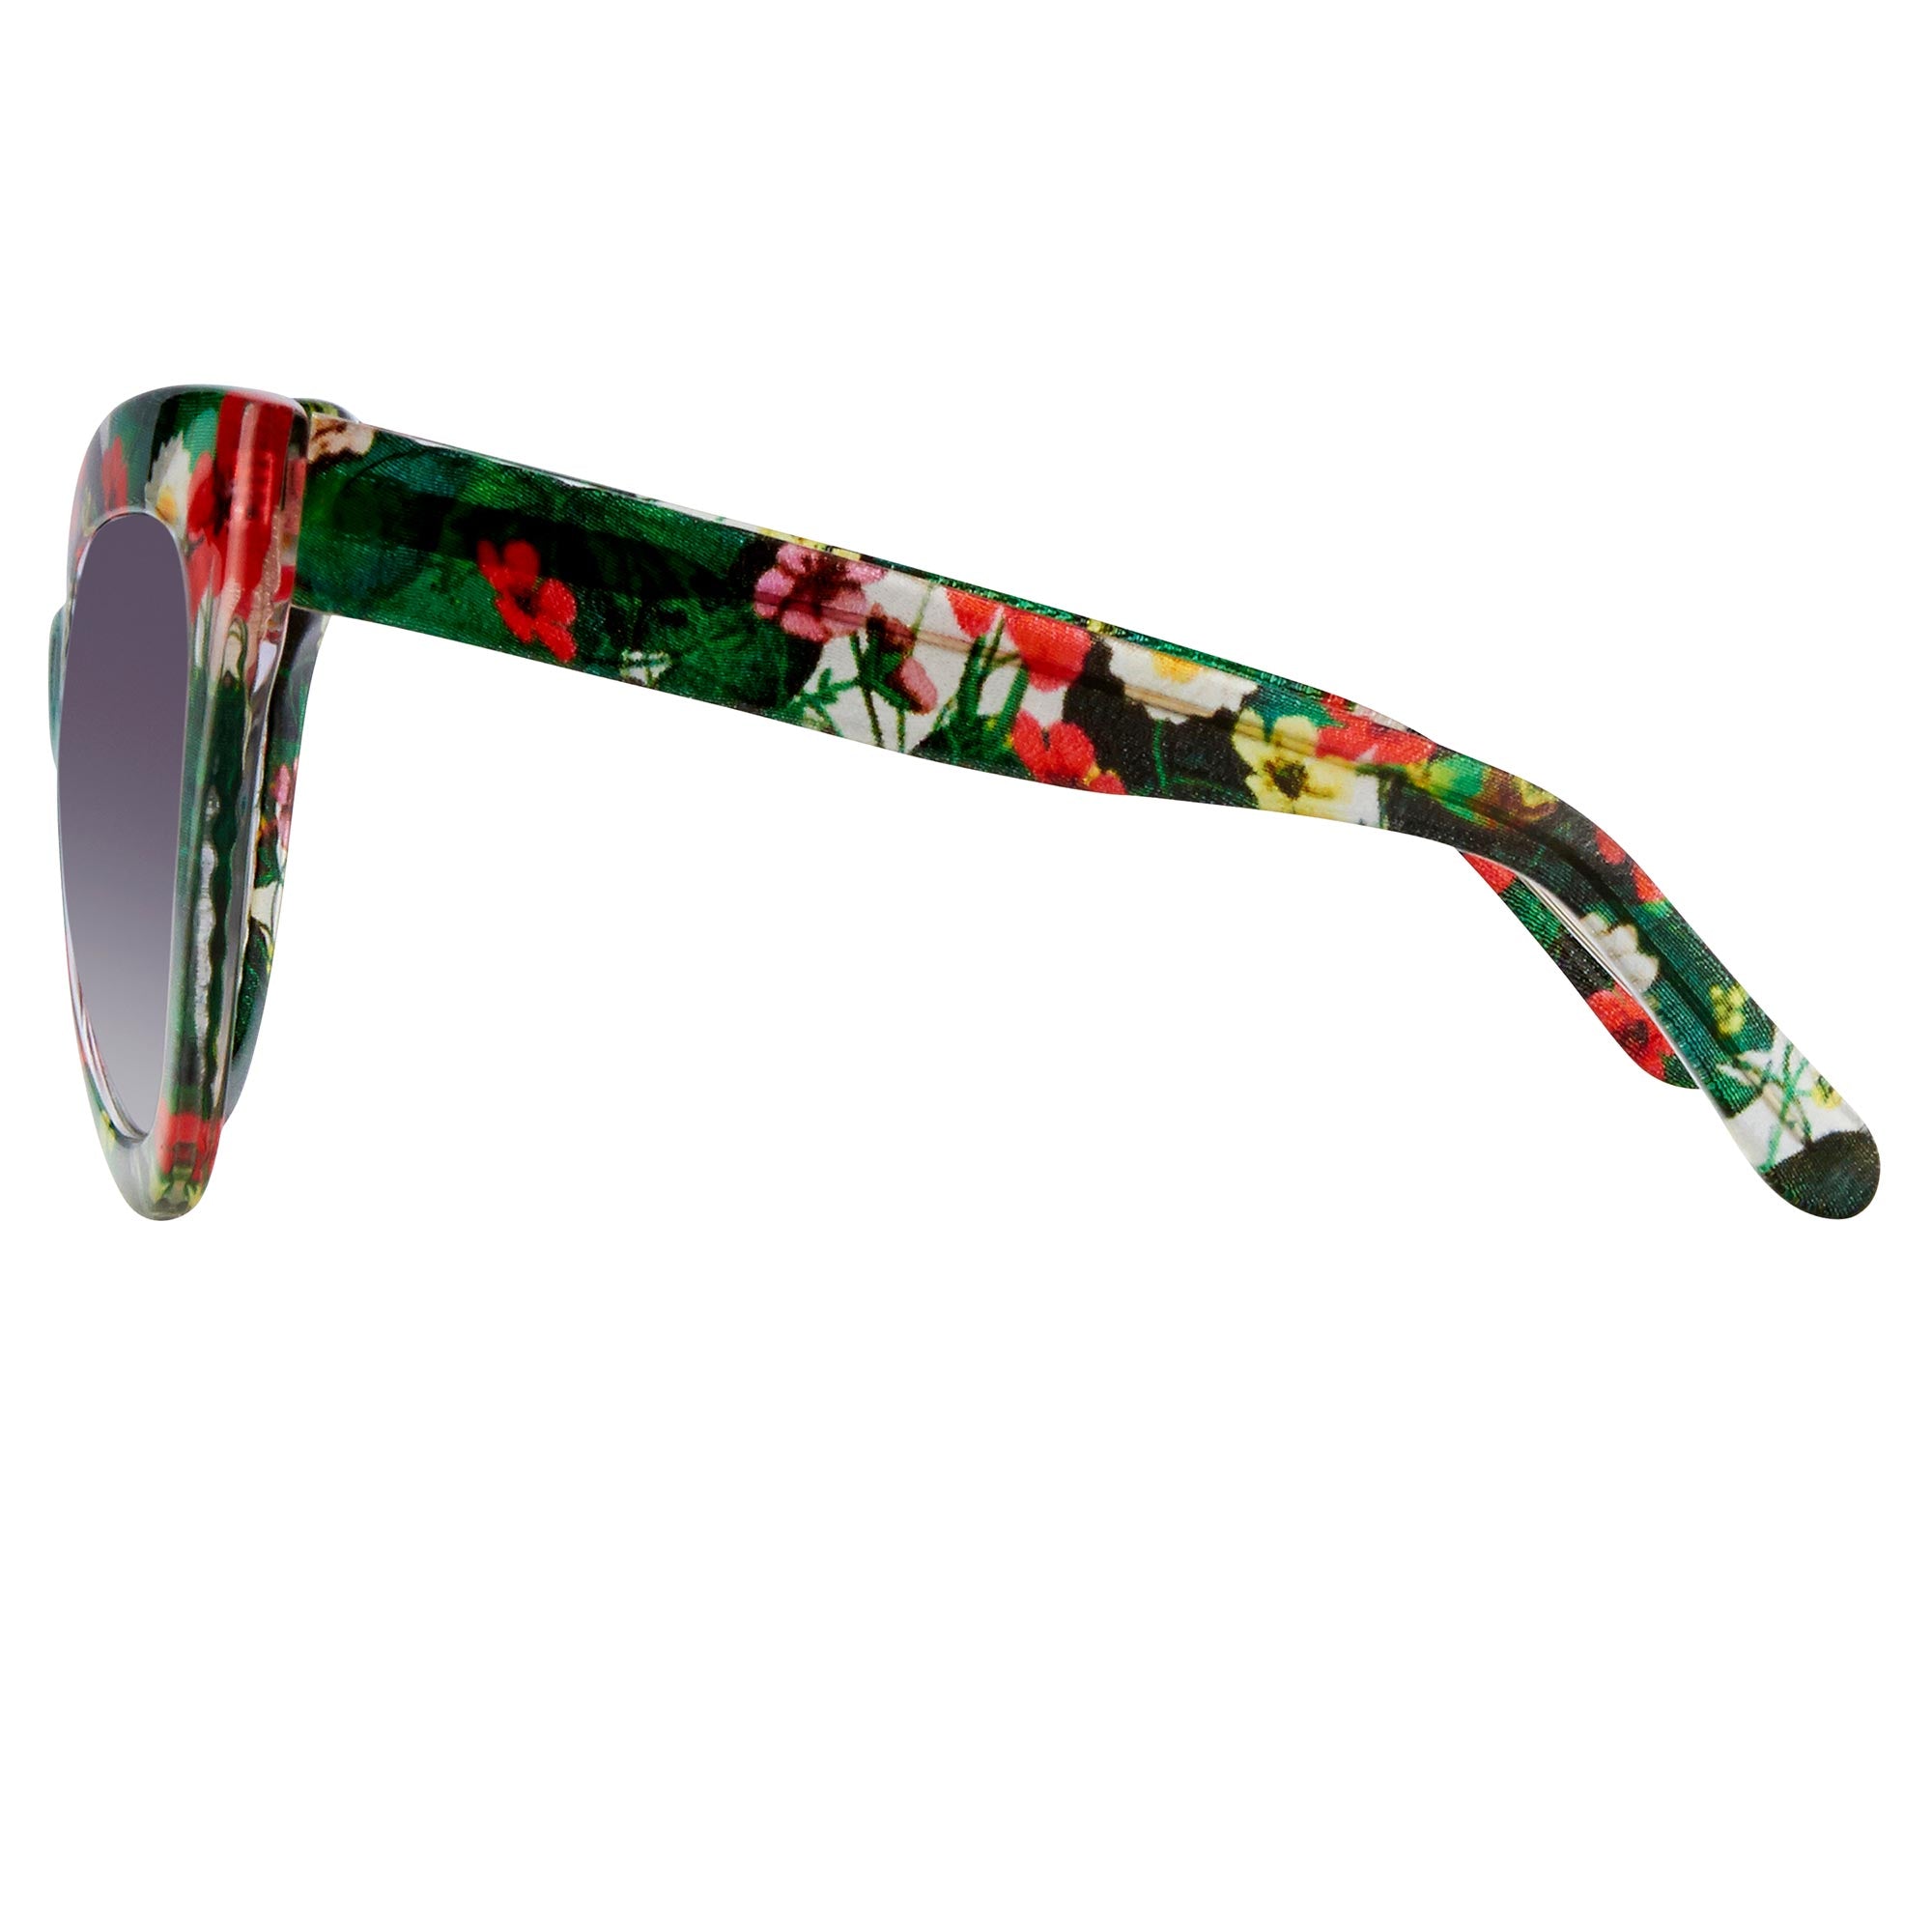 Color_EDM21C4SUN - Erdem 21 C4 Cat Eye Sunglasses